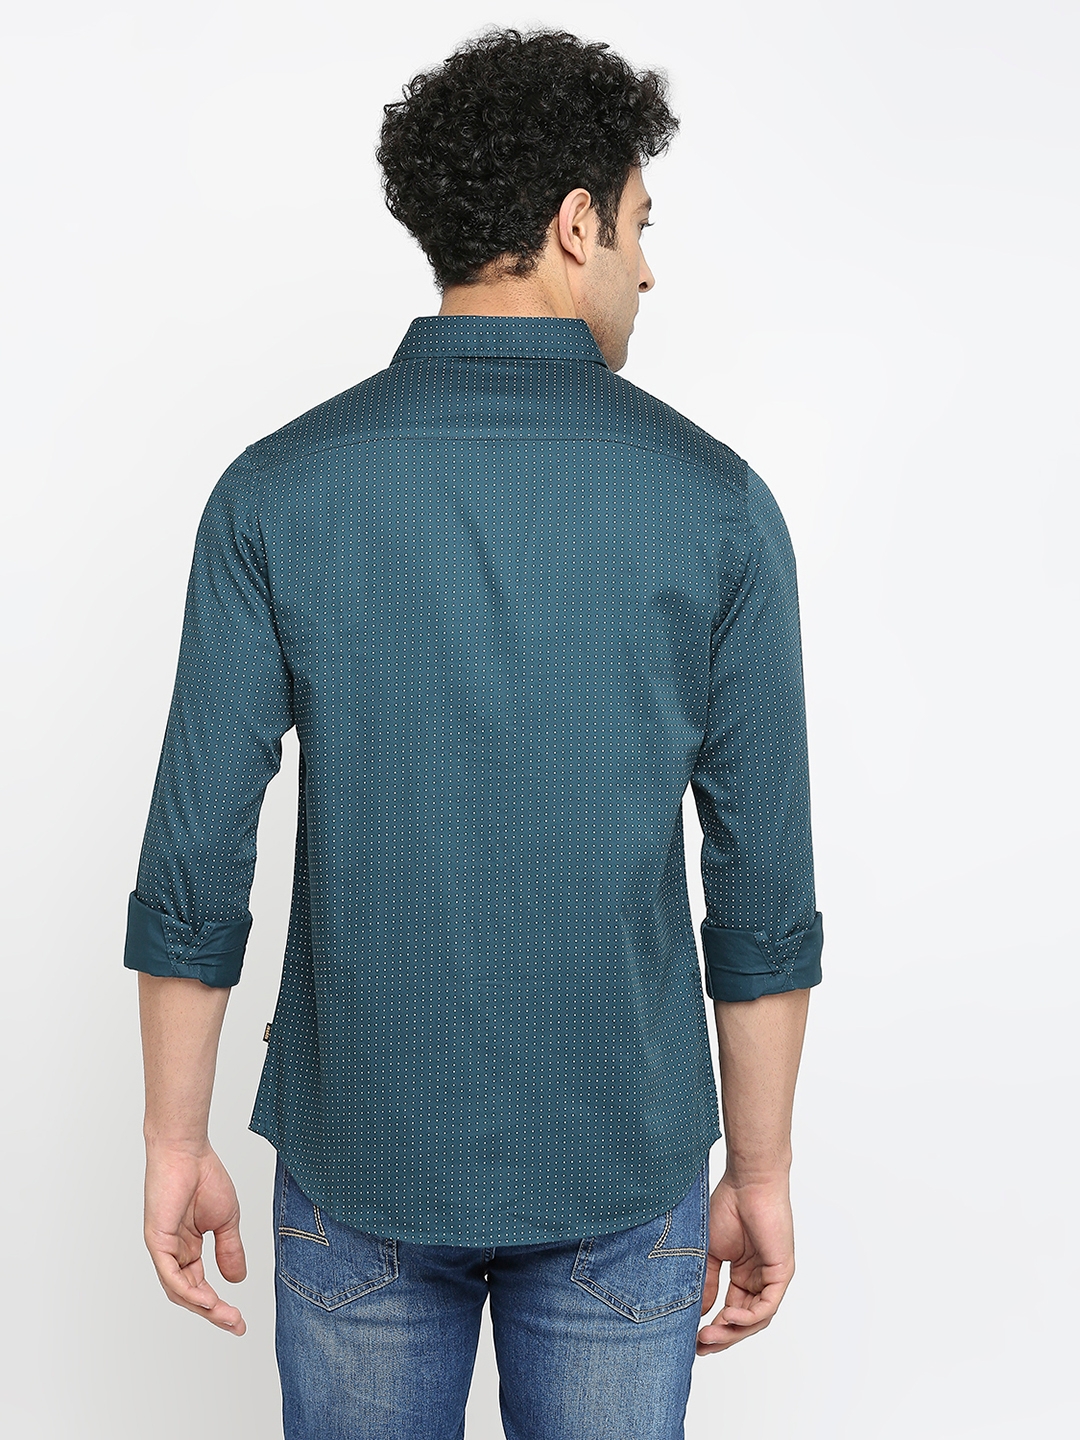 spykar | Spykar Men Teal Green Cotton Slim Fit Printed Shirt 3